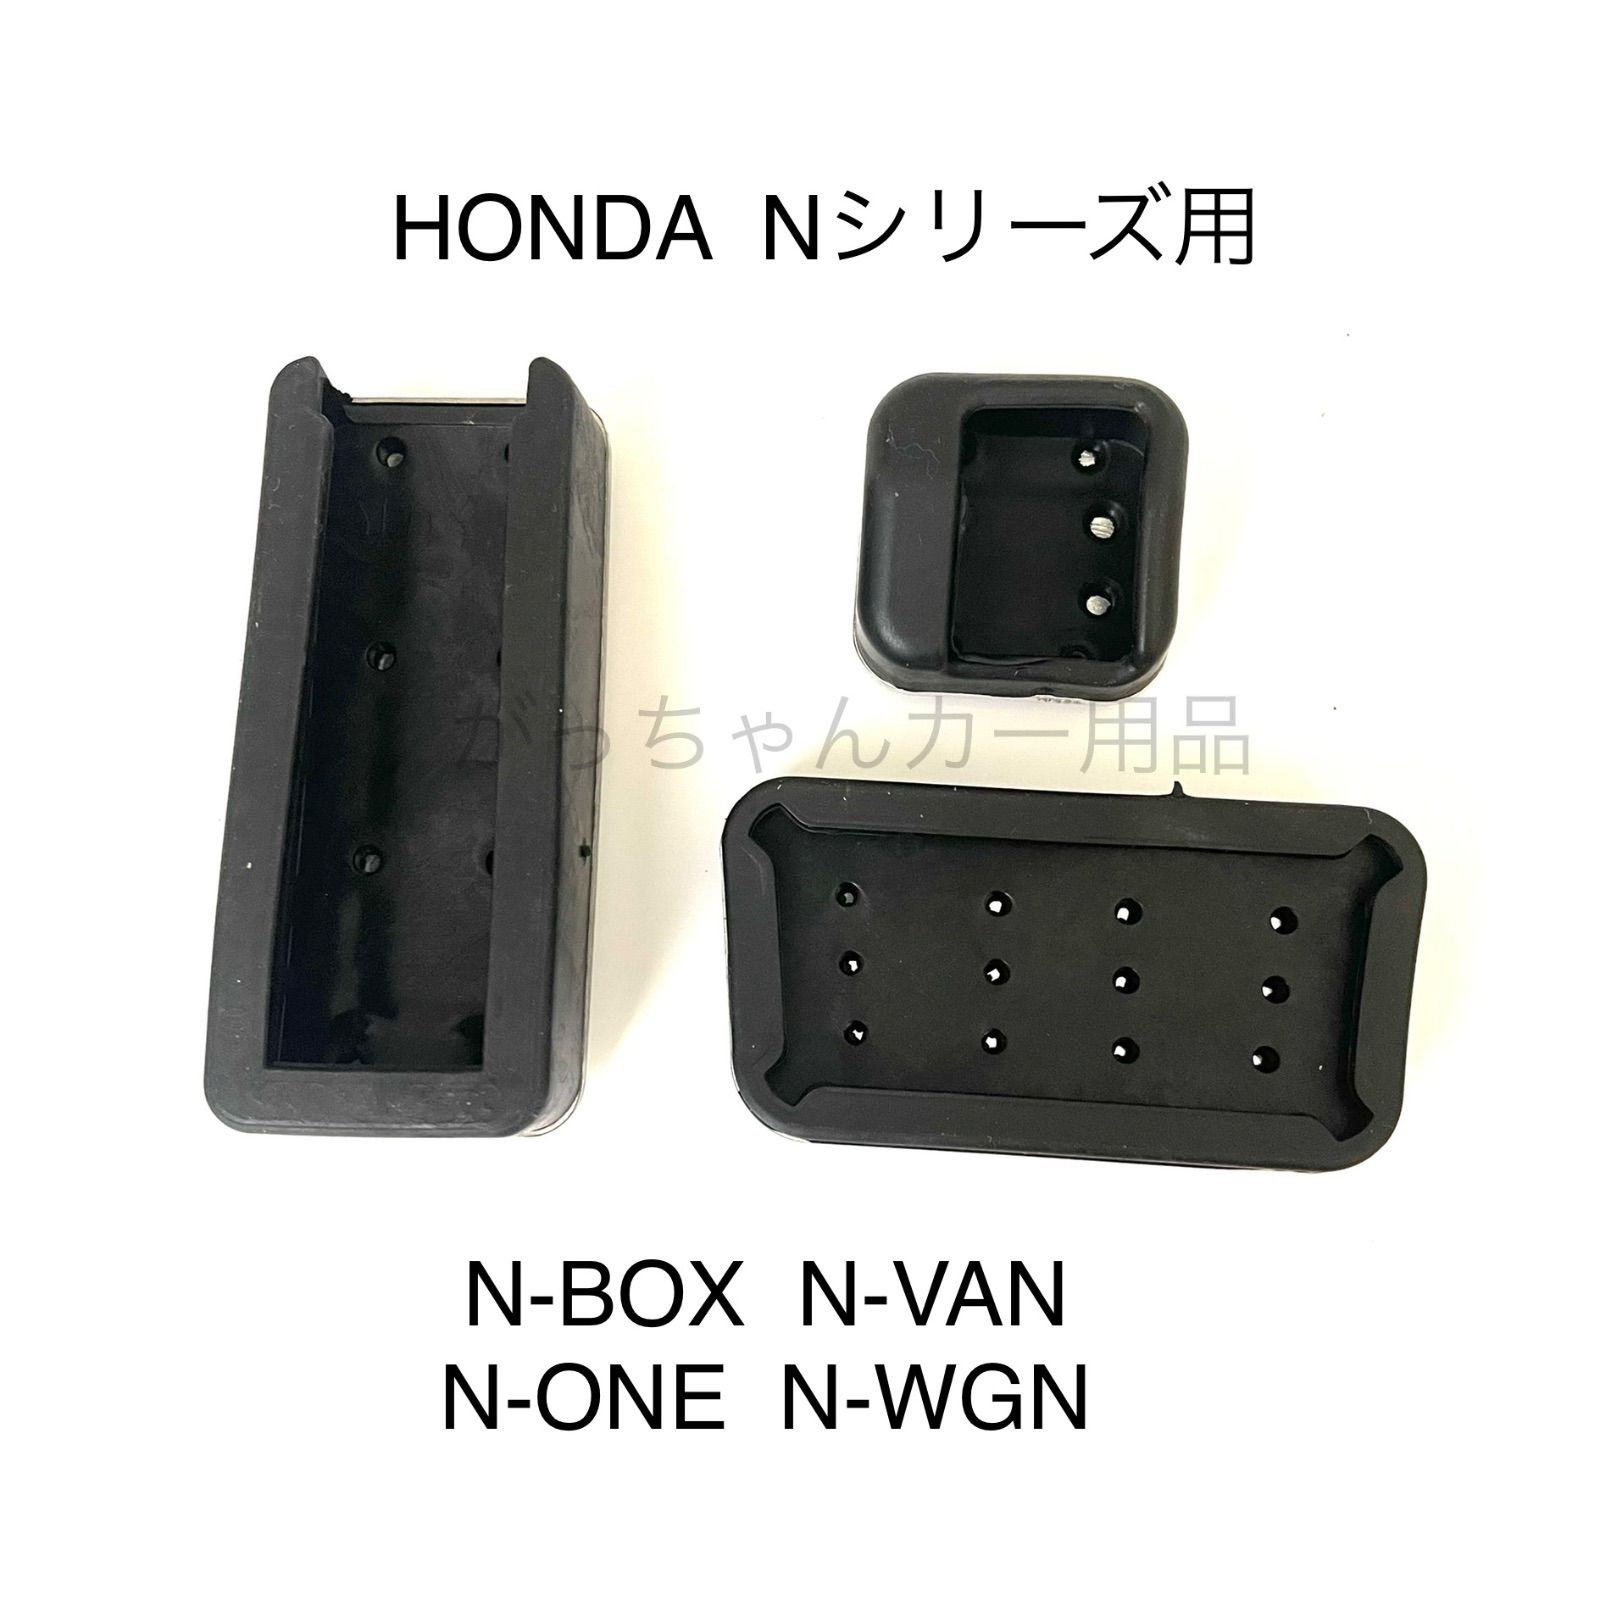 HONDA Nシリーズ用 パーキングブレーキペダルカバー N-BOX N-VAN N-ONE N-WGN用